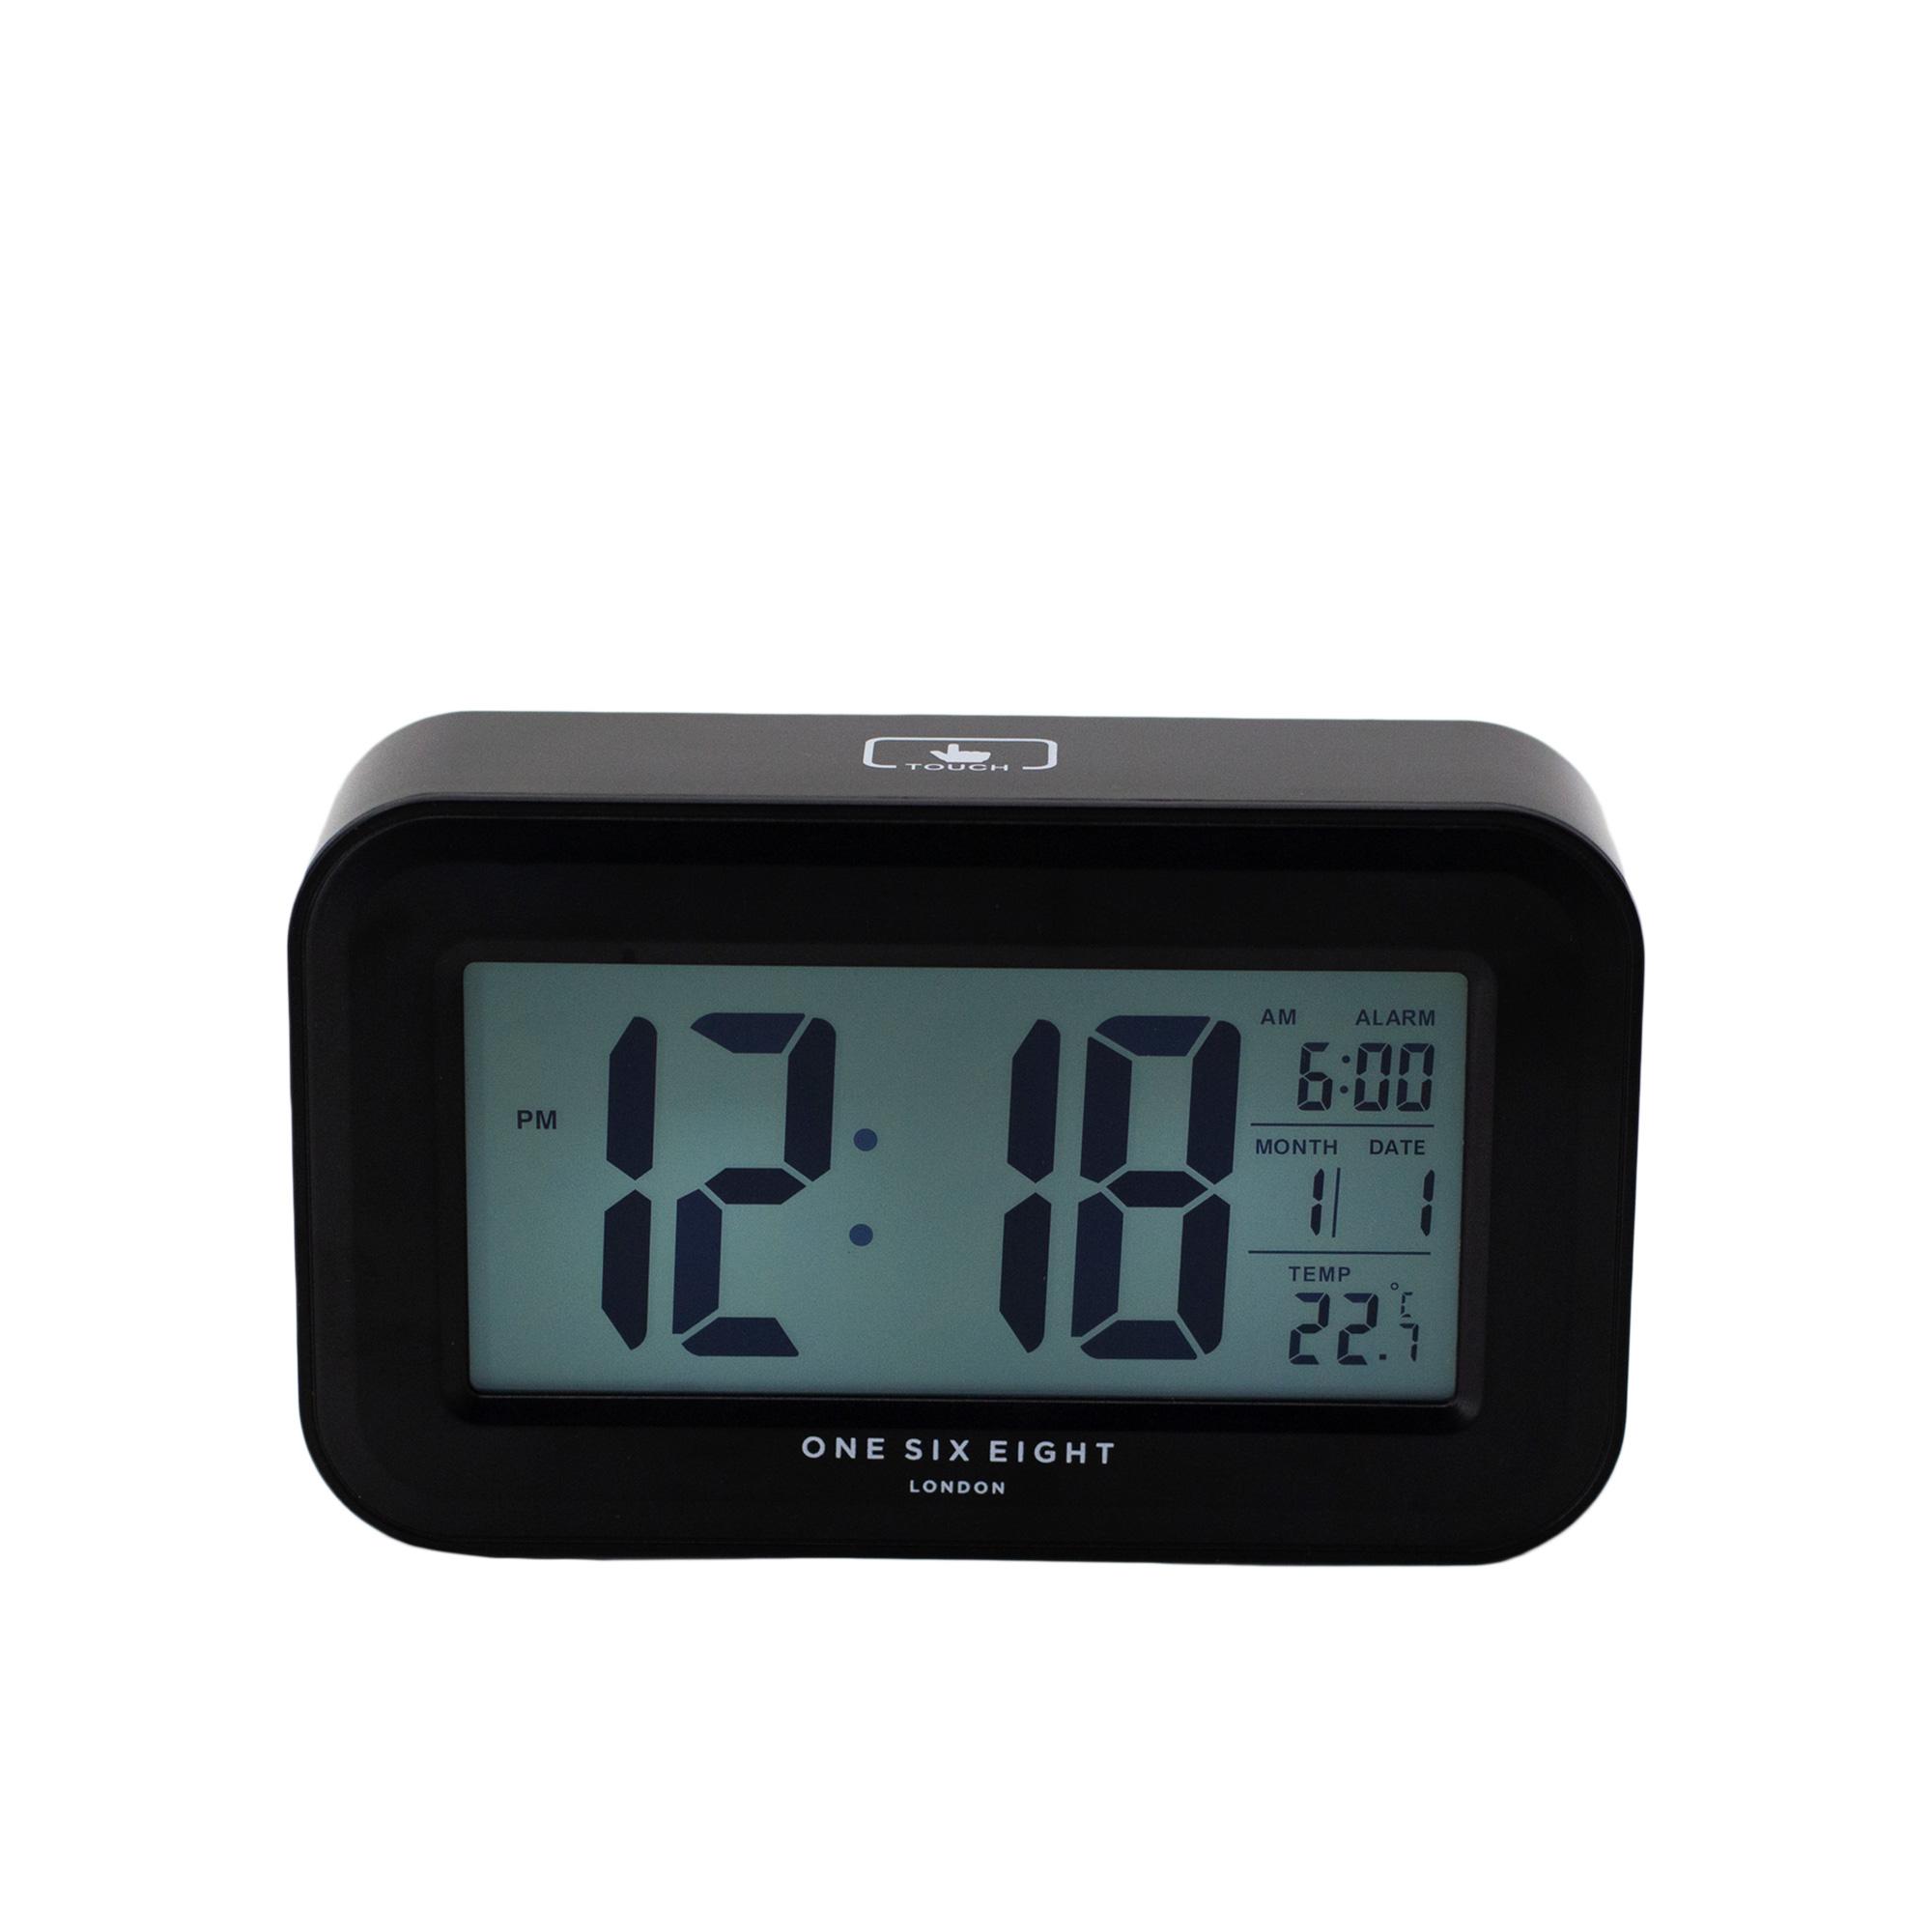 One Six Eight London Reilly Digital Alarm Clock Black Image 1